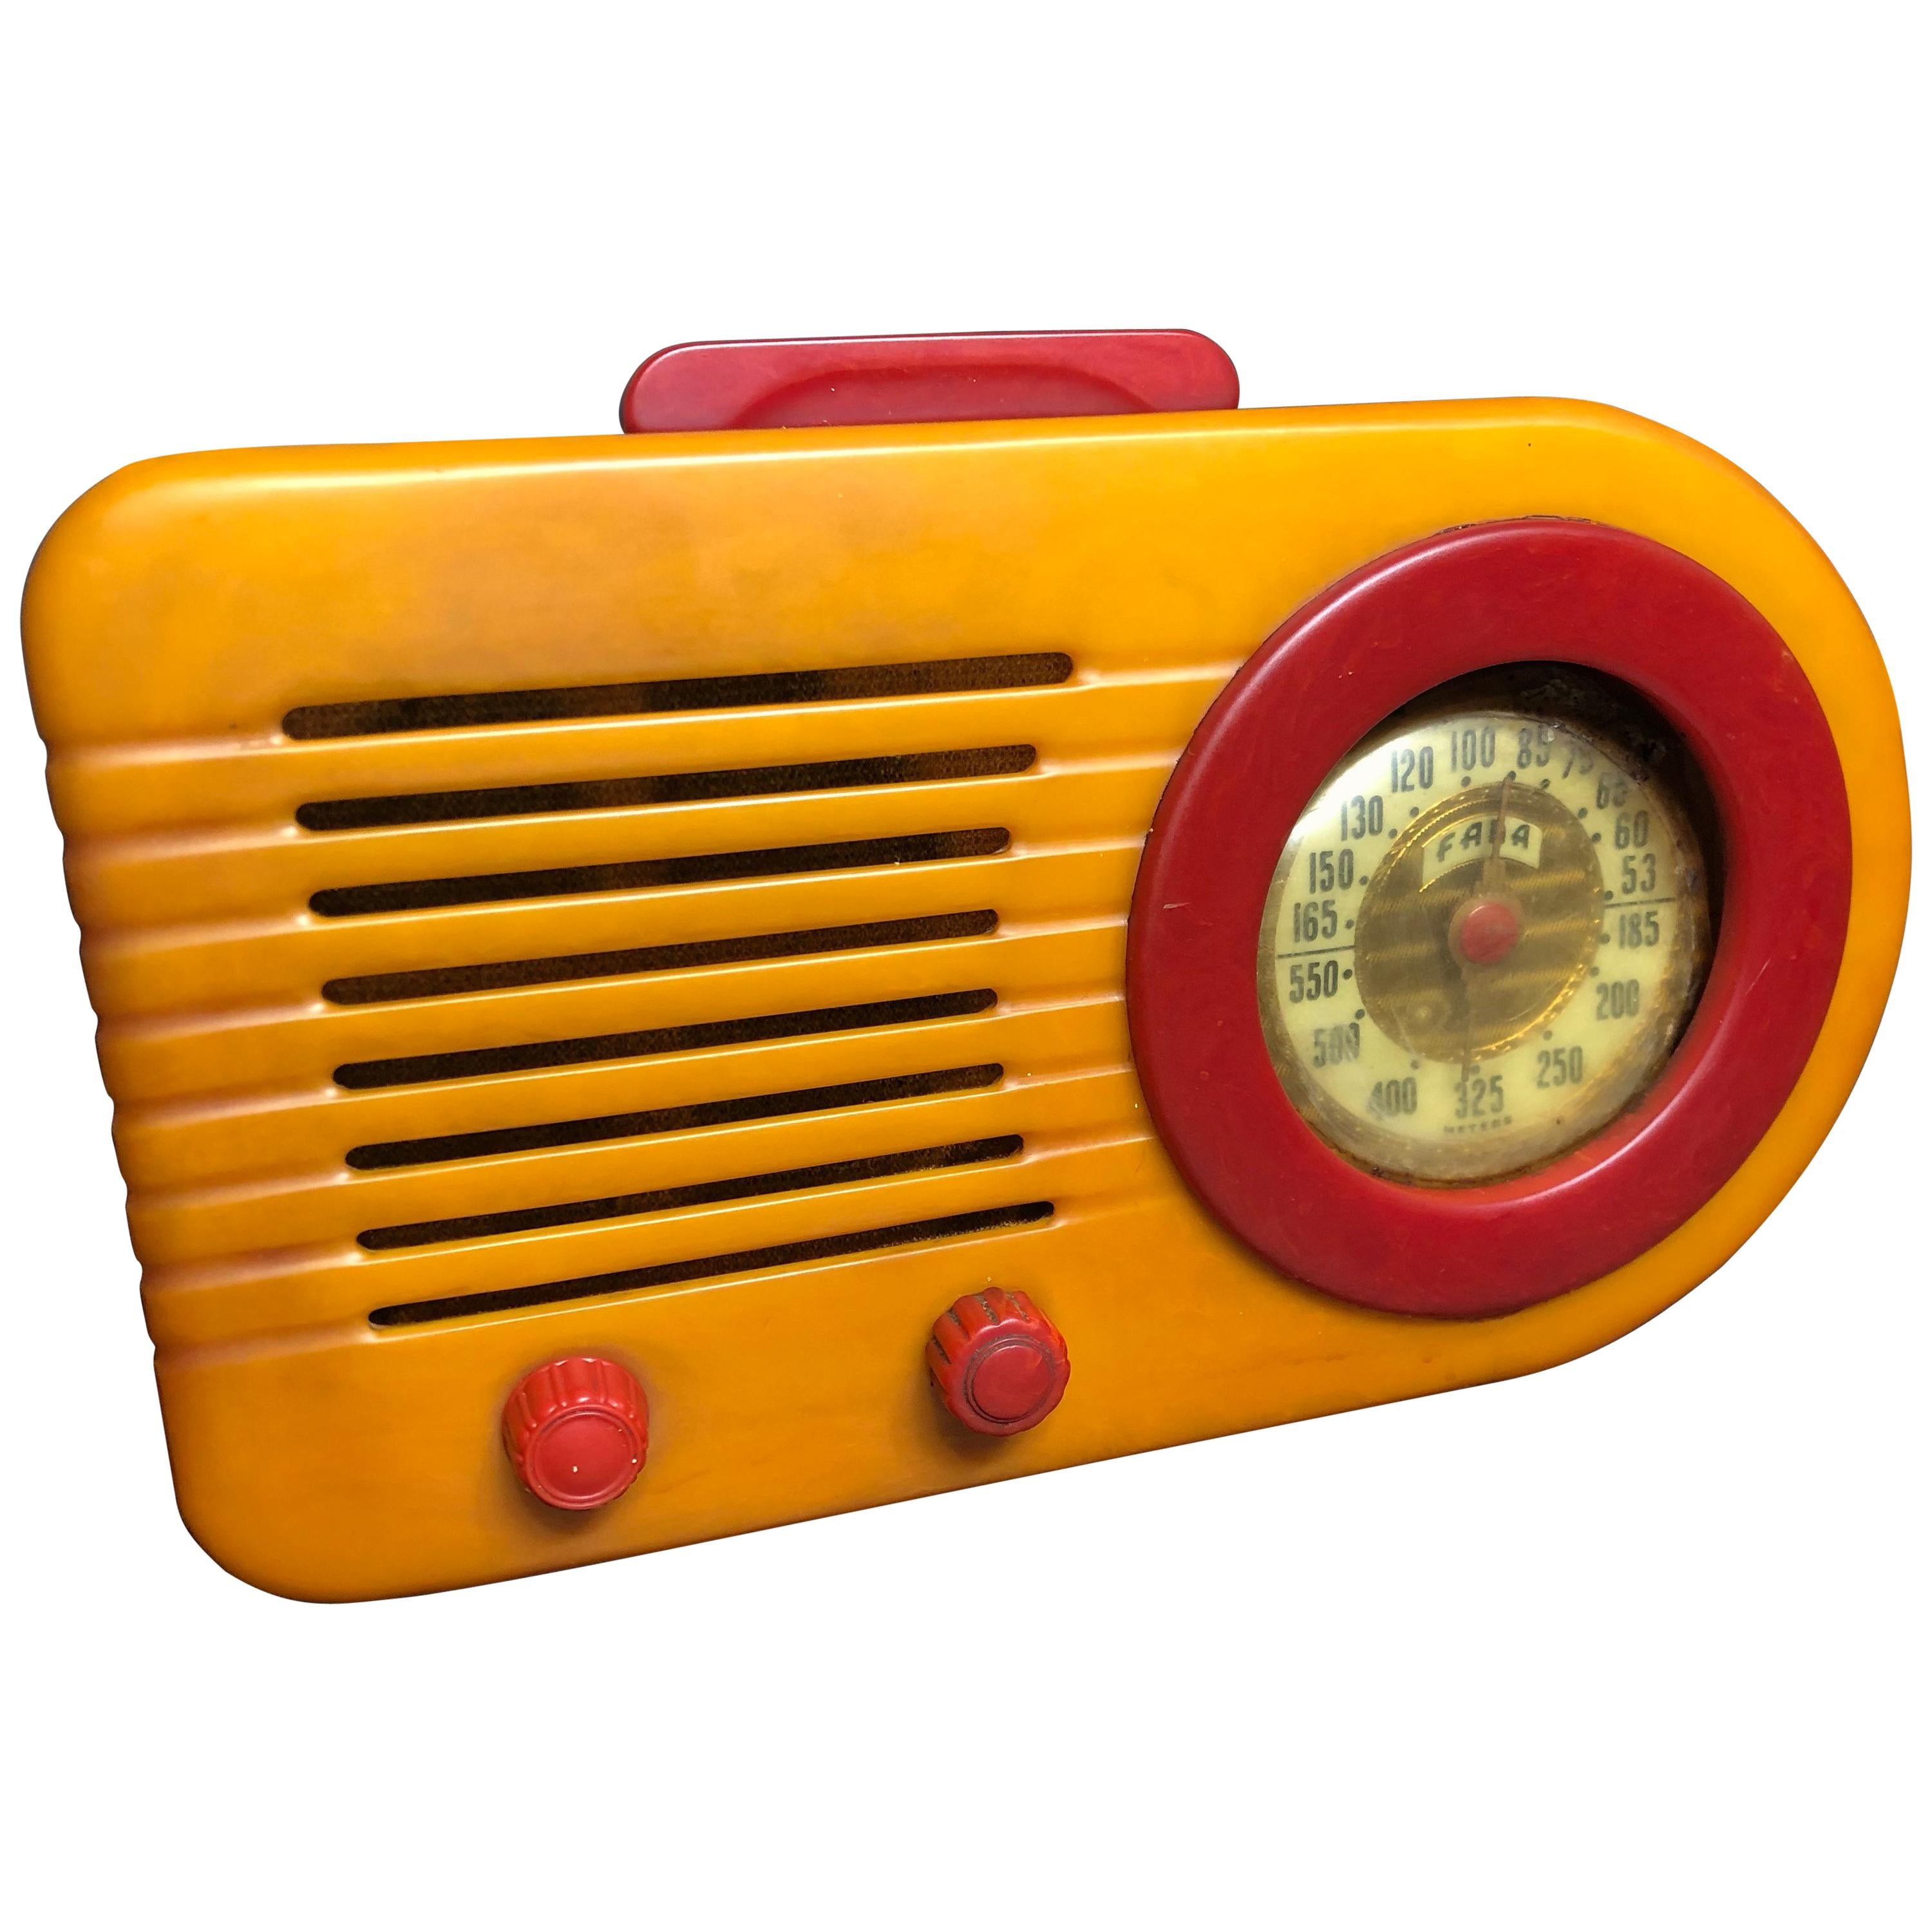 1940 Fada Bullet 116 Bakelite Catalin Radio, Orange and Red